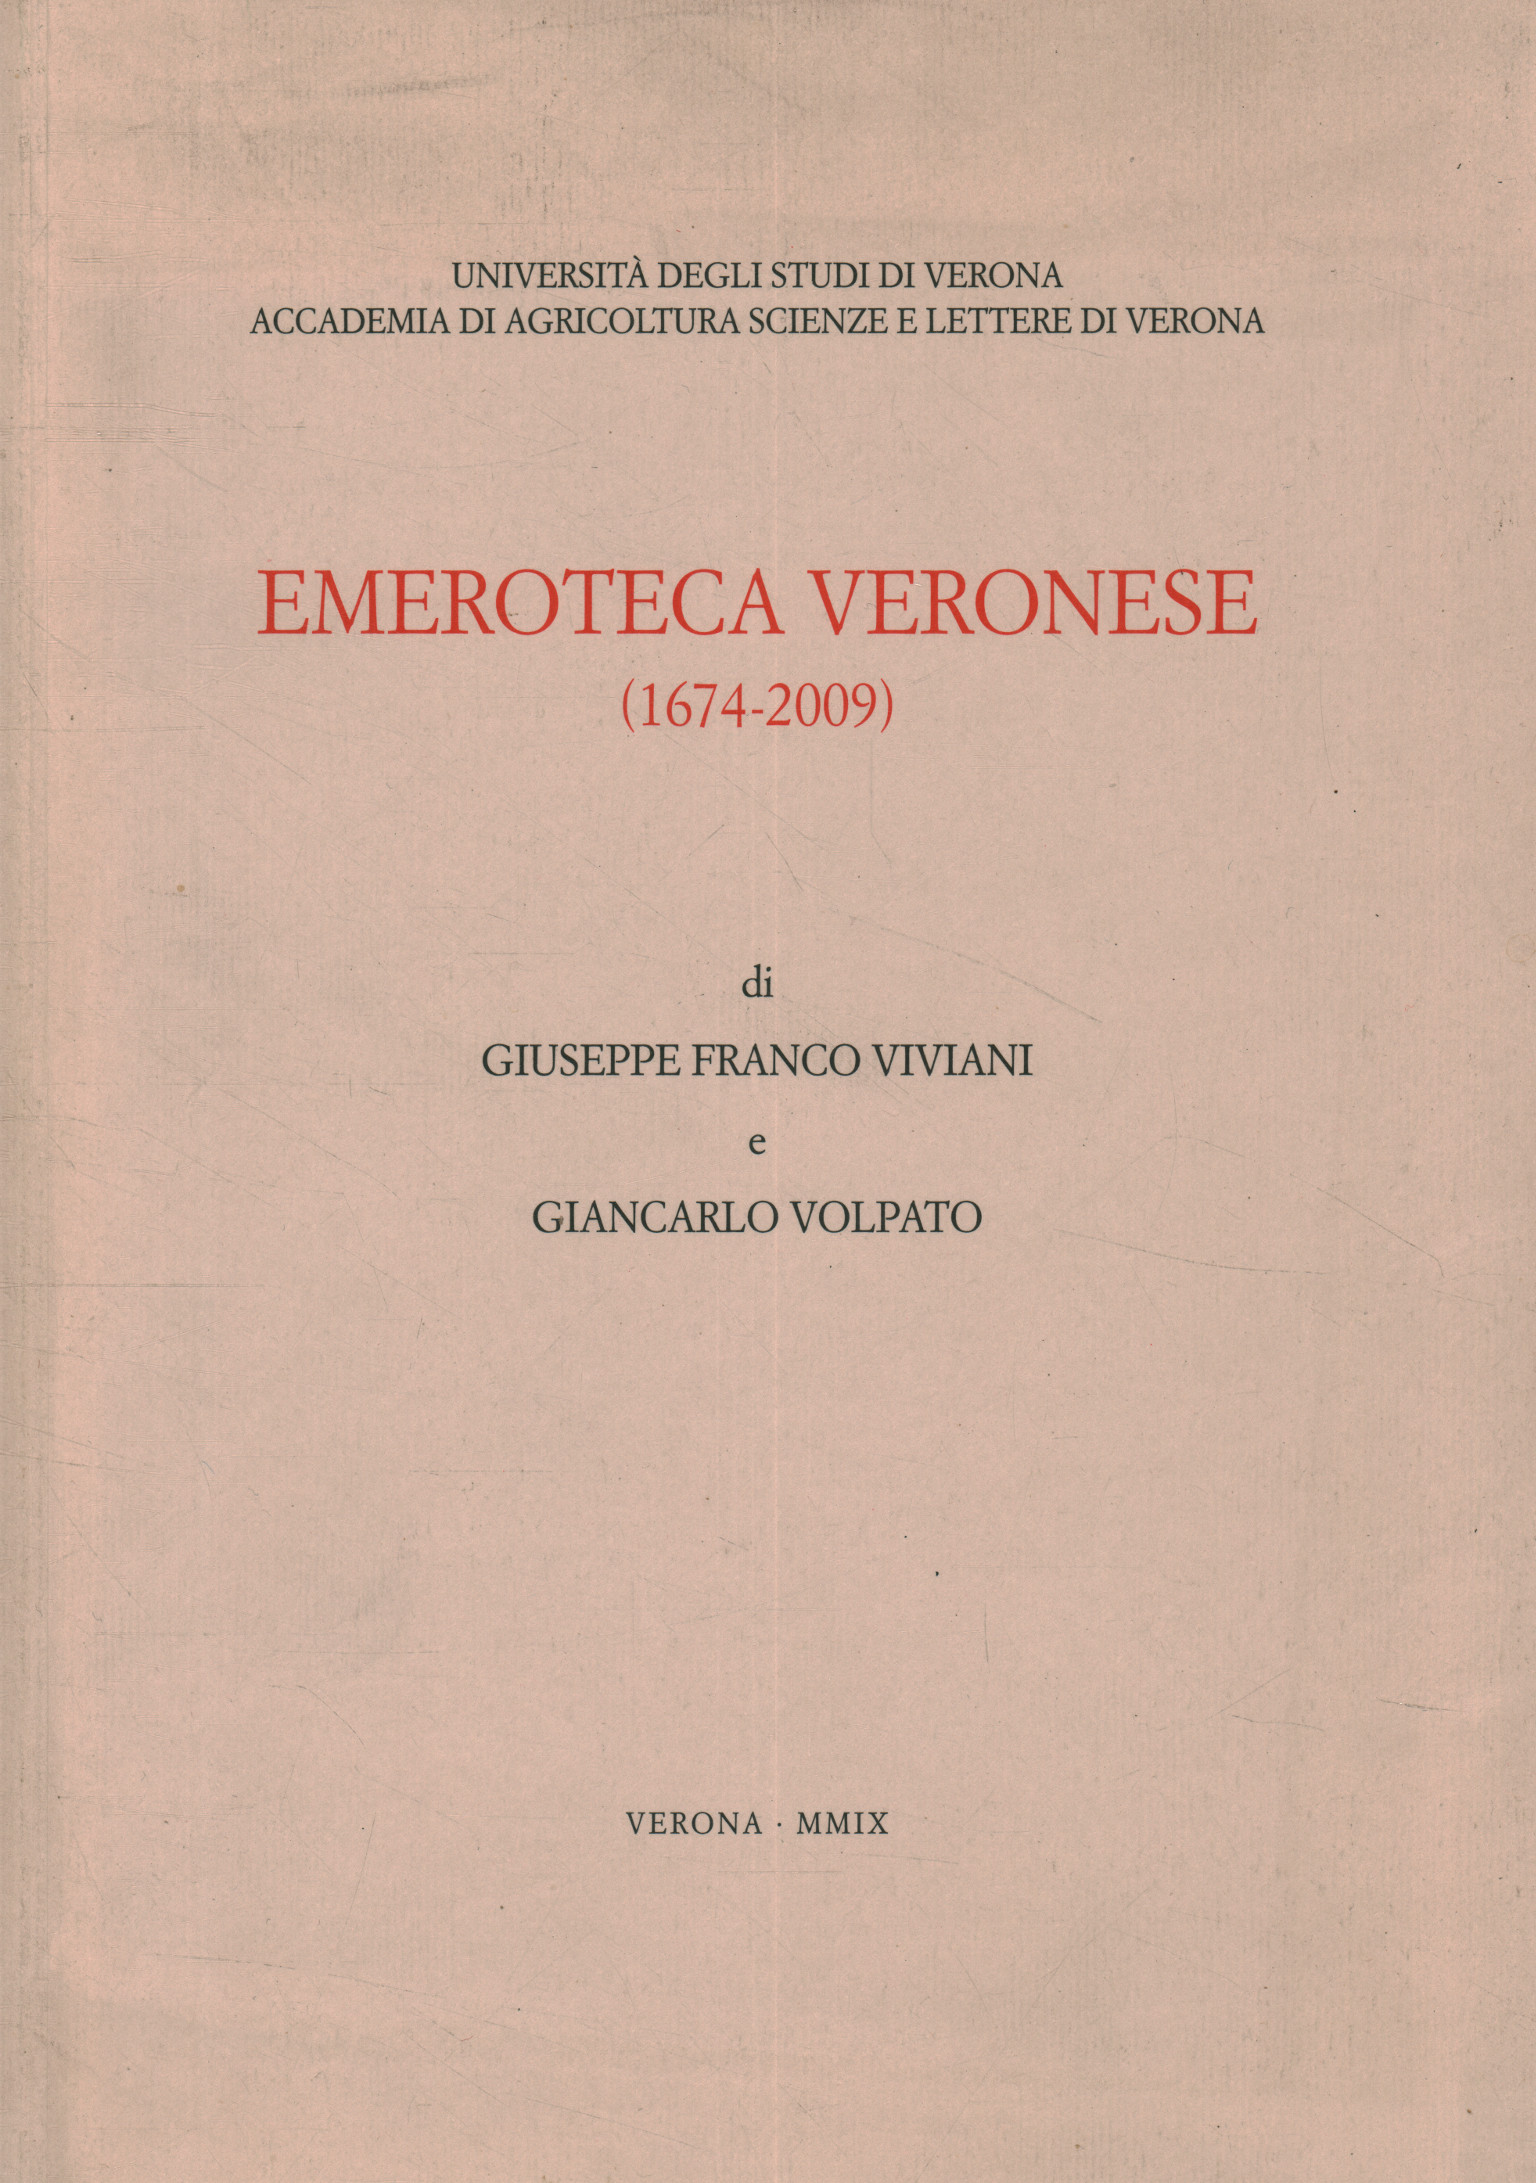 Veronese newspaper library (1674-2009)